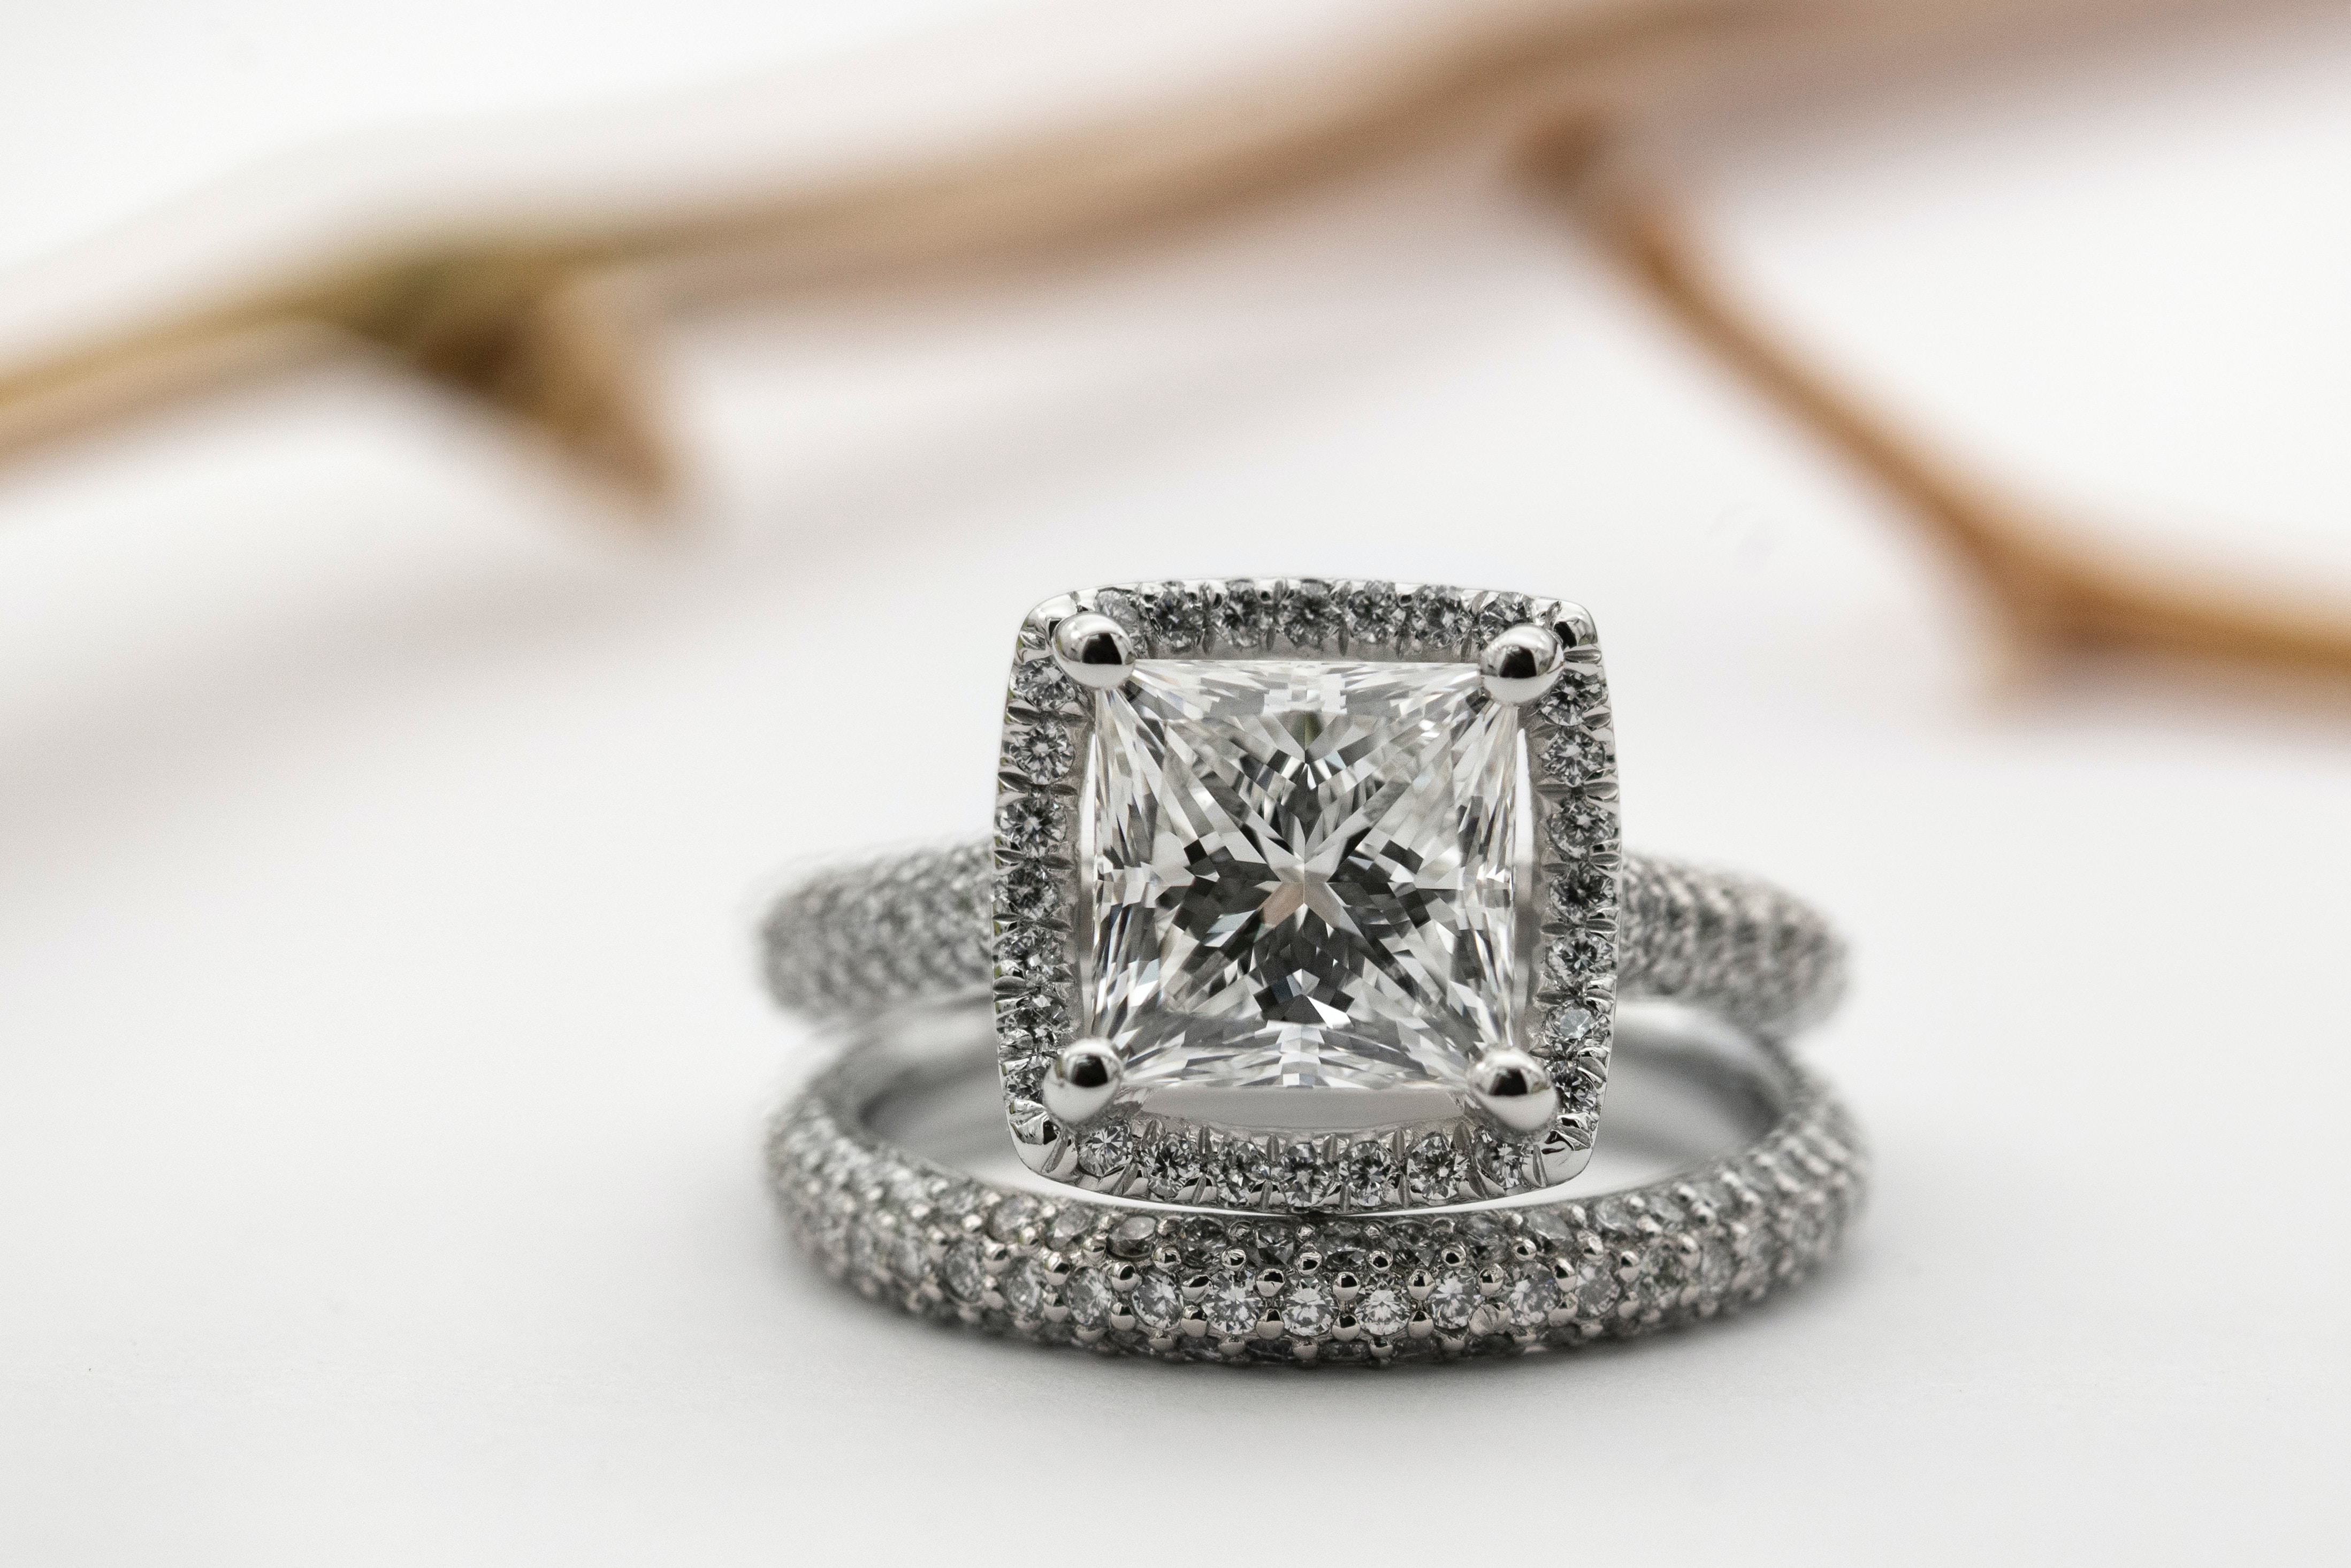 Beautiful diamond engagement ring and wedding band